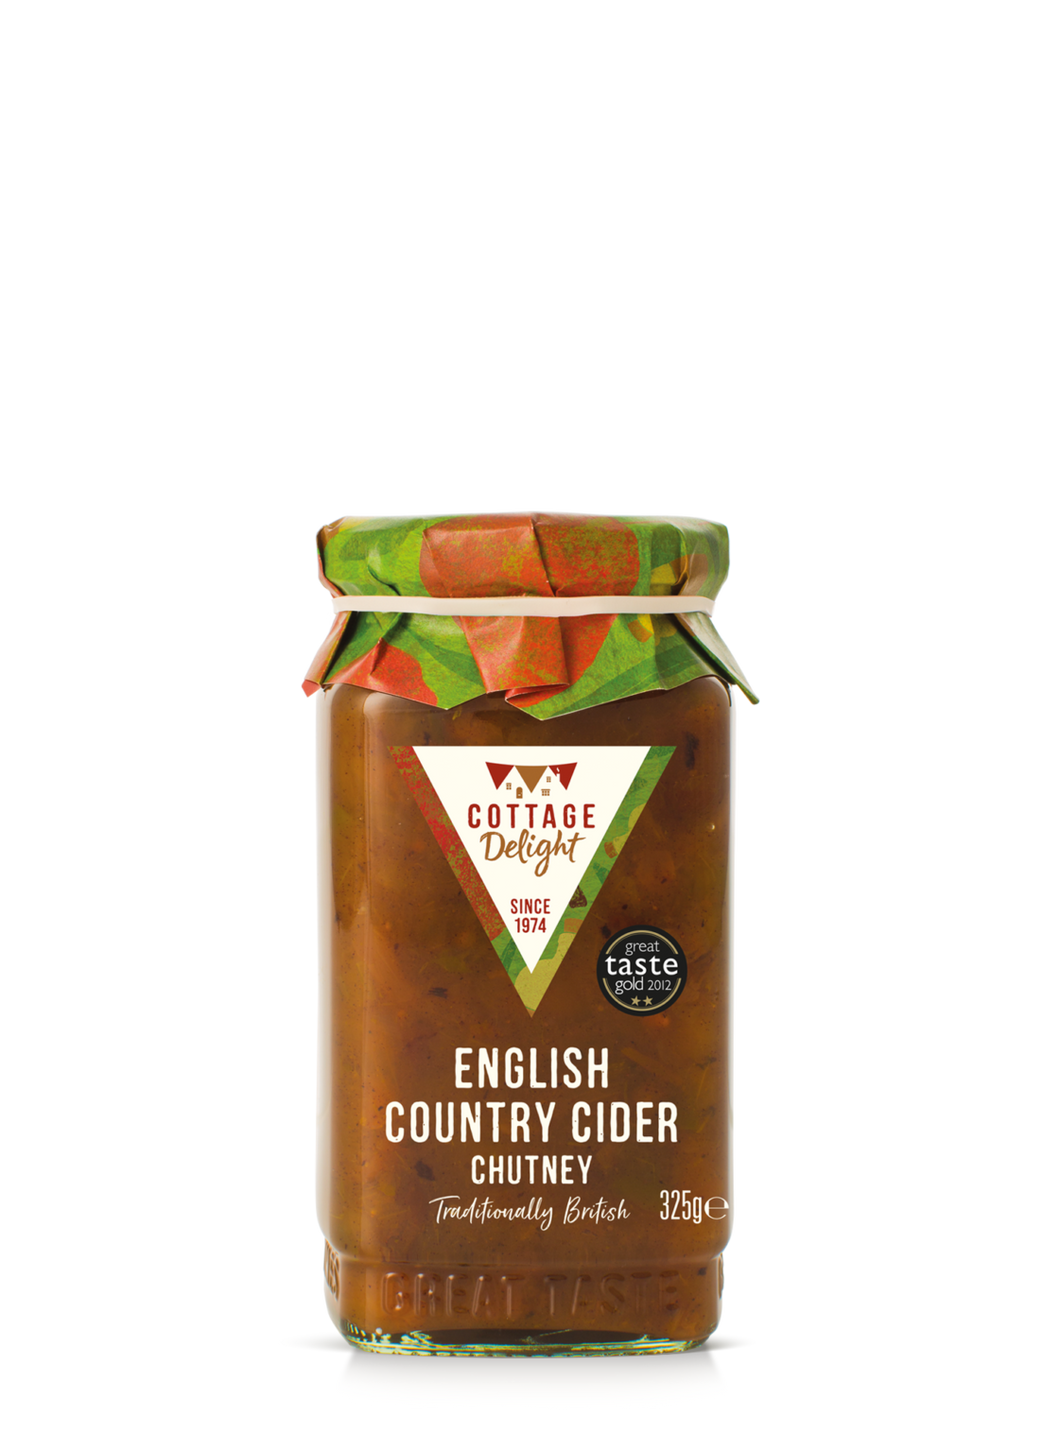 English country cider chutney